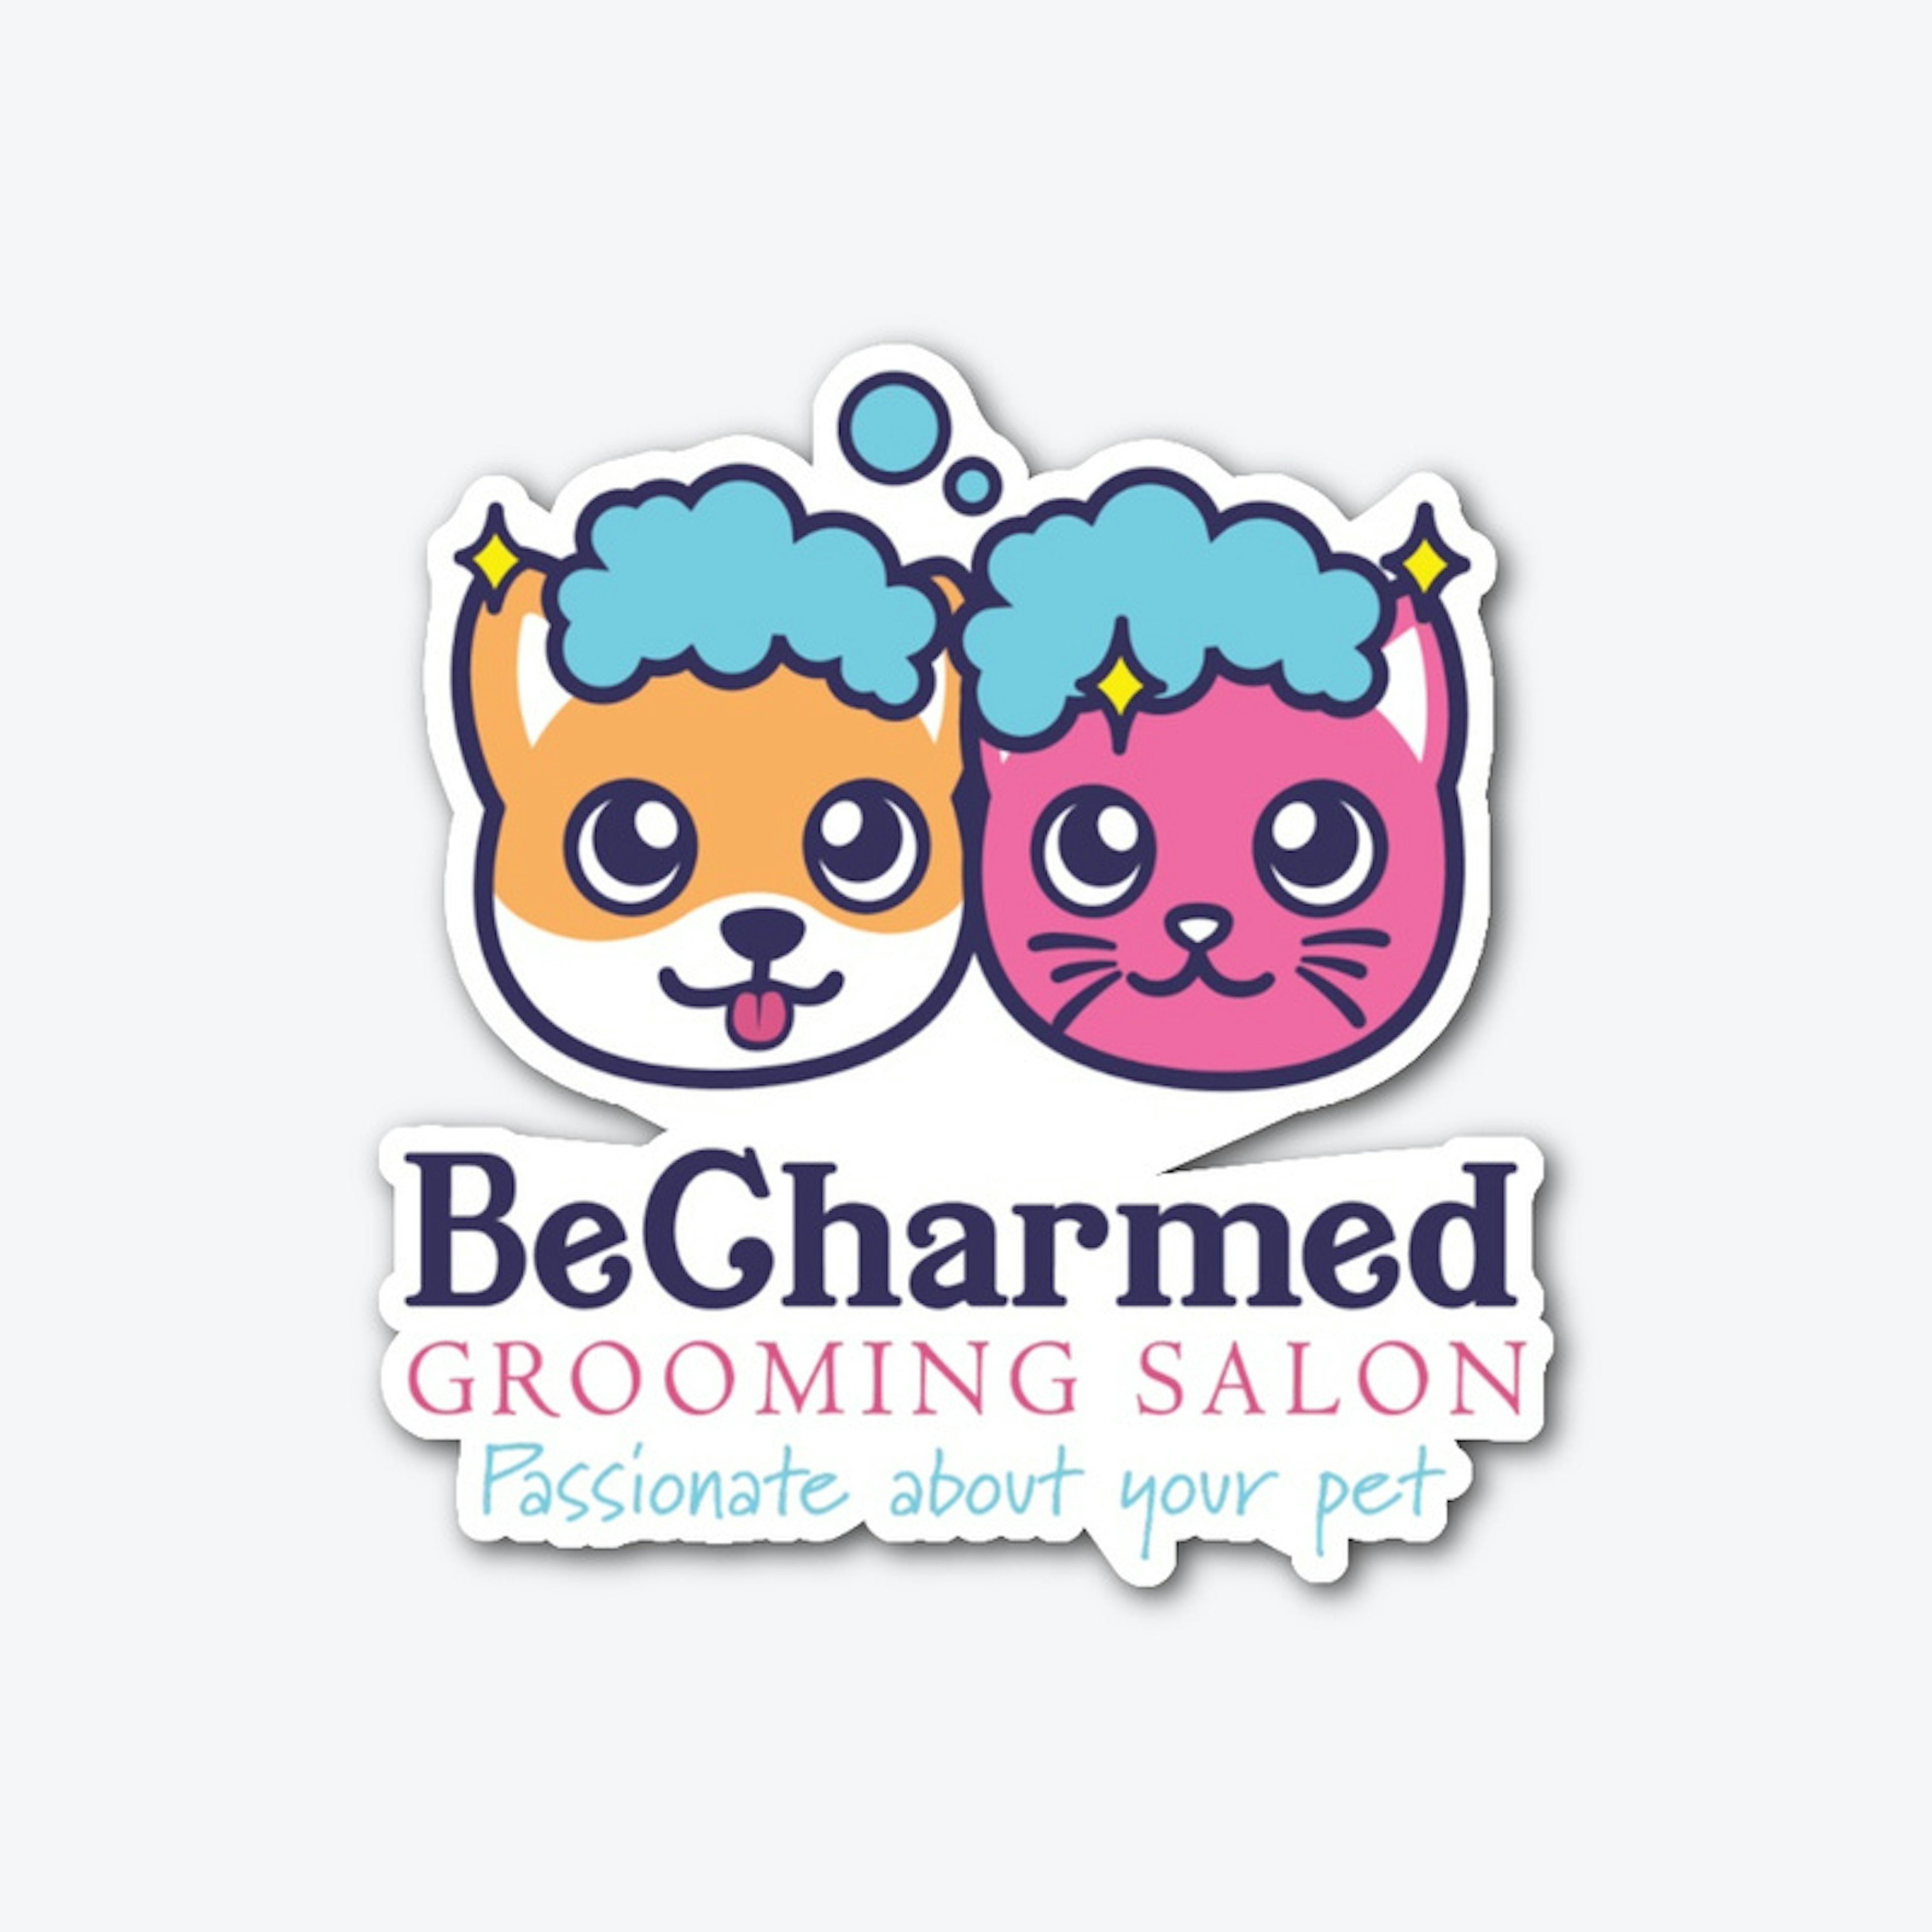 BeCharmed Grooming Salon Merch!!!